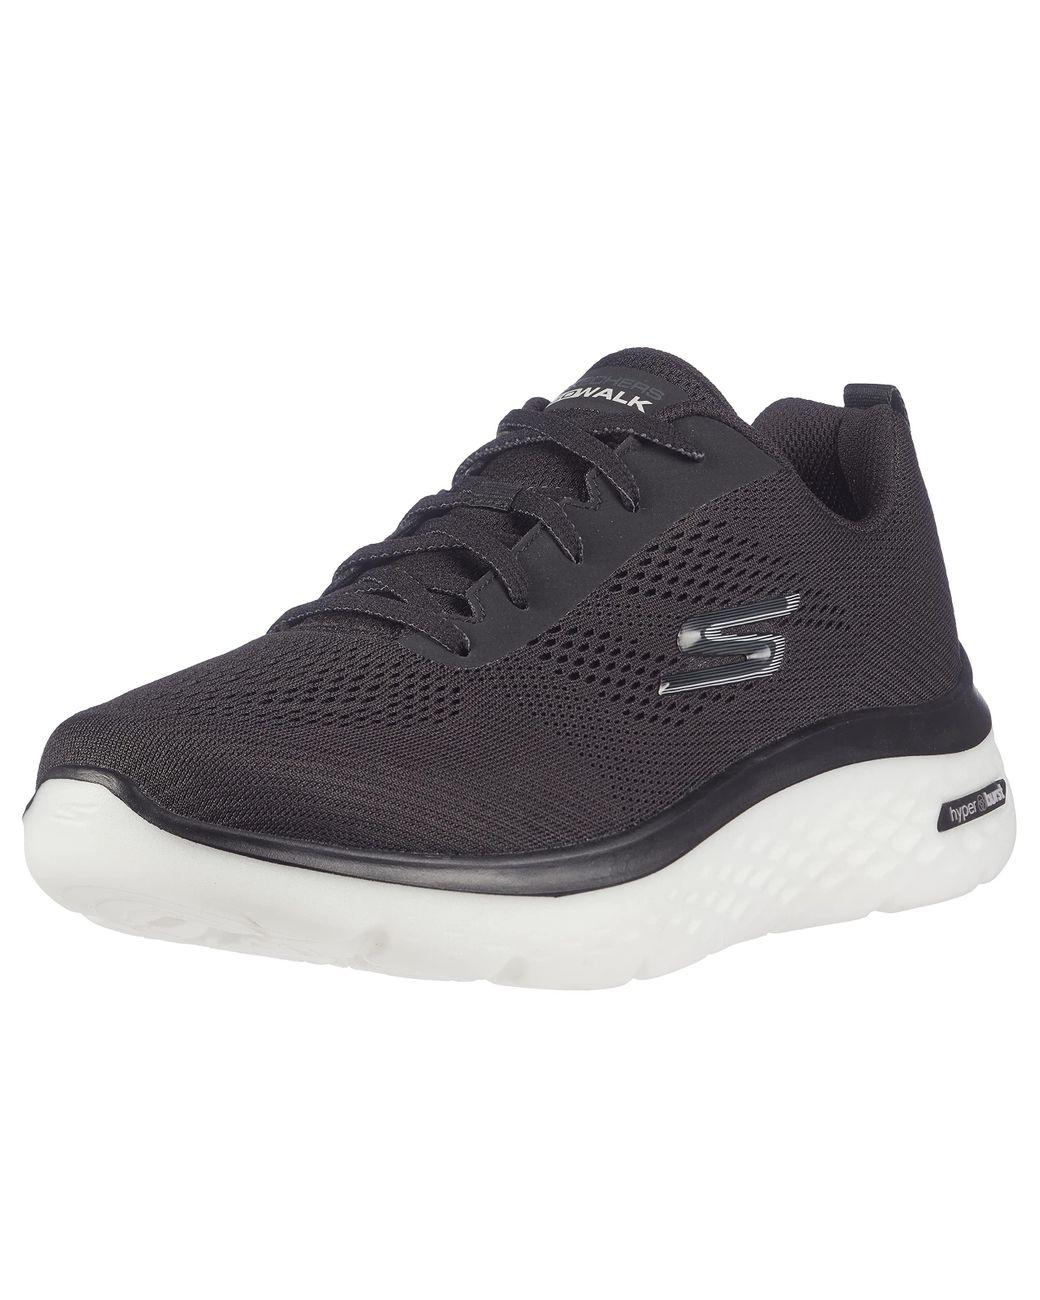 Skechers Gowalk Hyper Burst Lace-up Performance Athletic Walking Shoe  Sneaker in Black/White (Black) for Men - Save 44% | Lyst